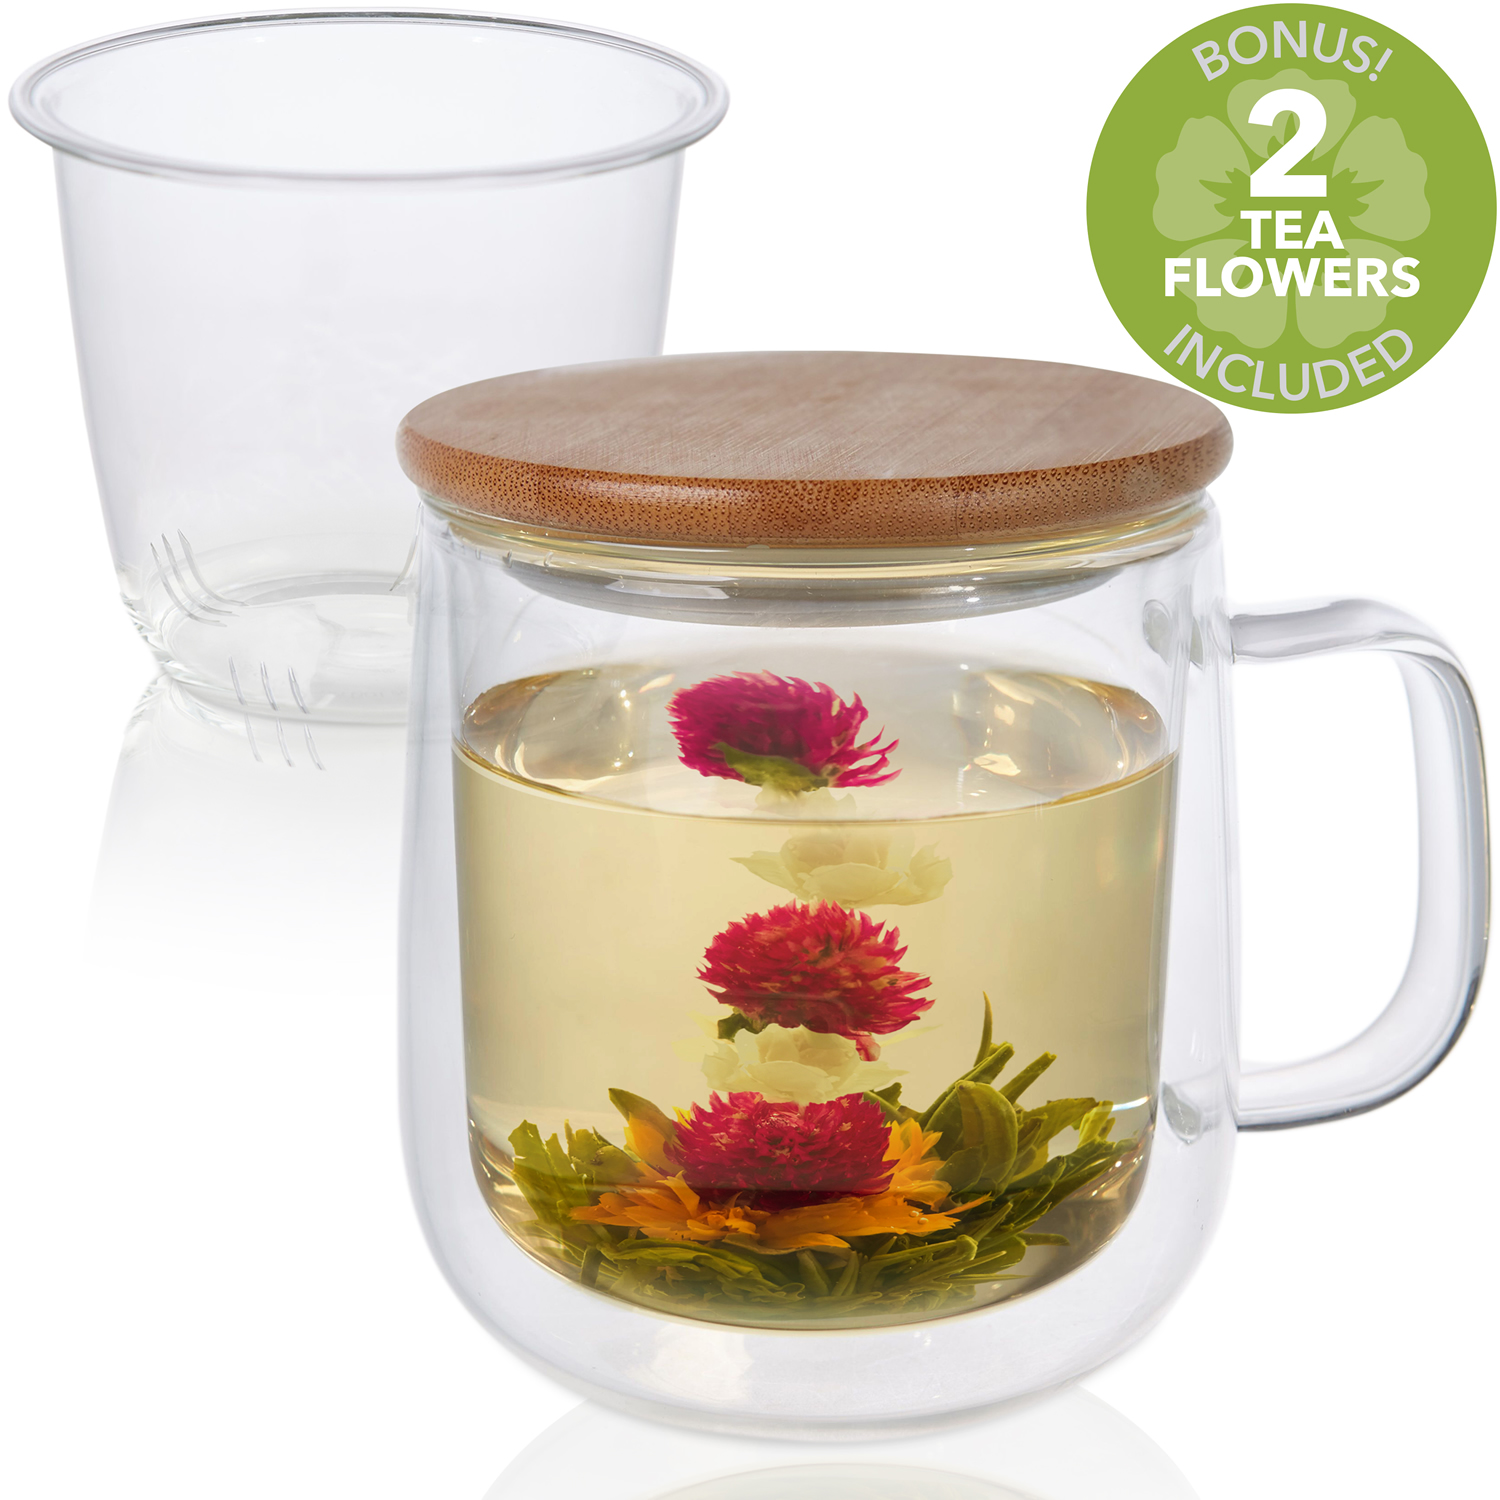 Tea-For-One Infuser Mug